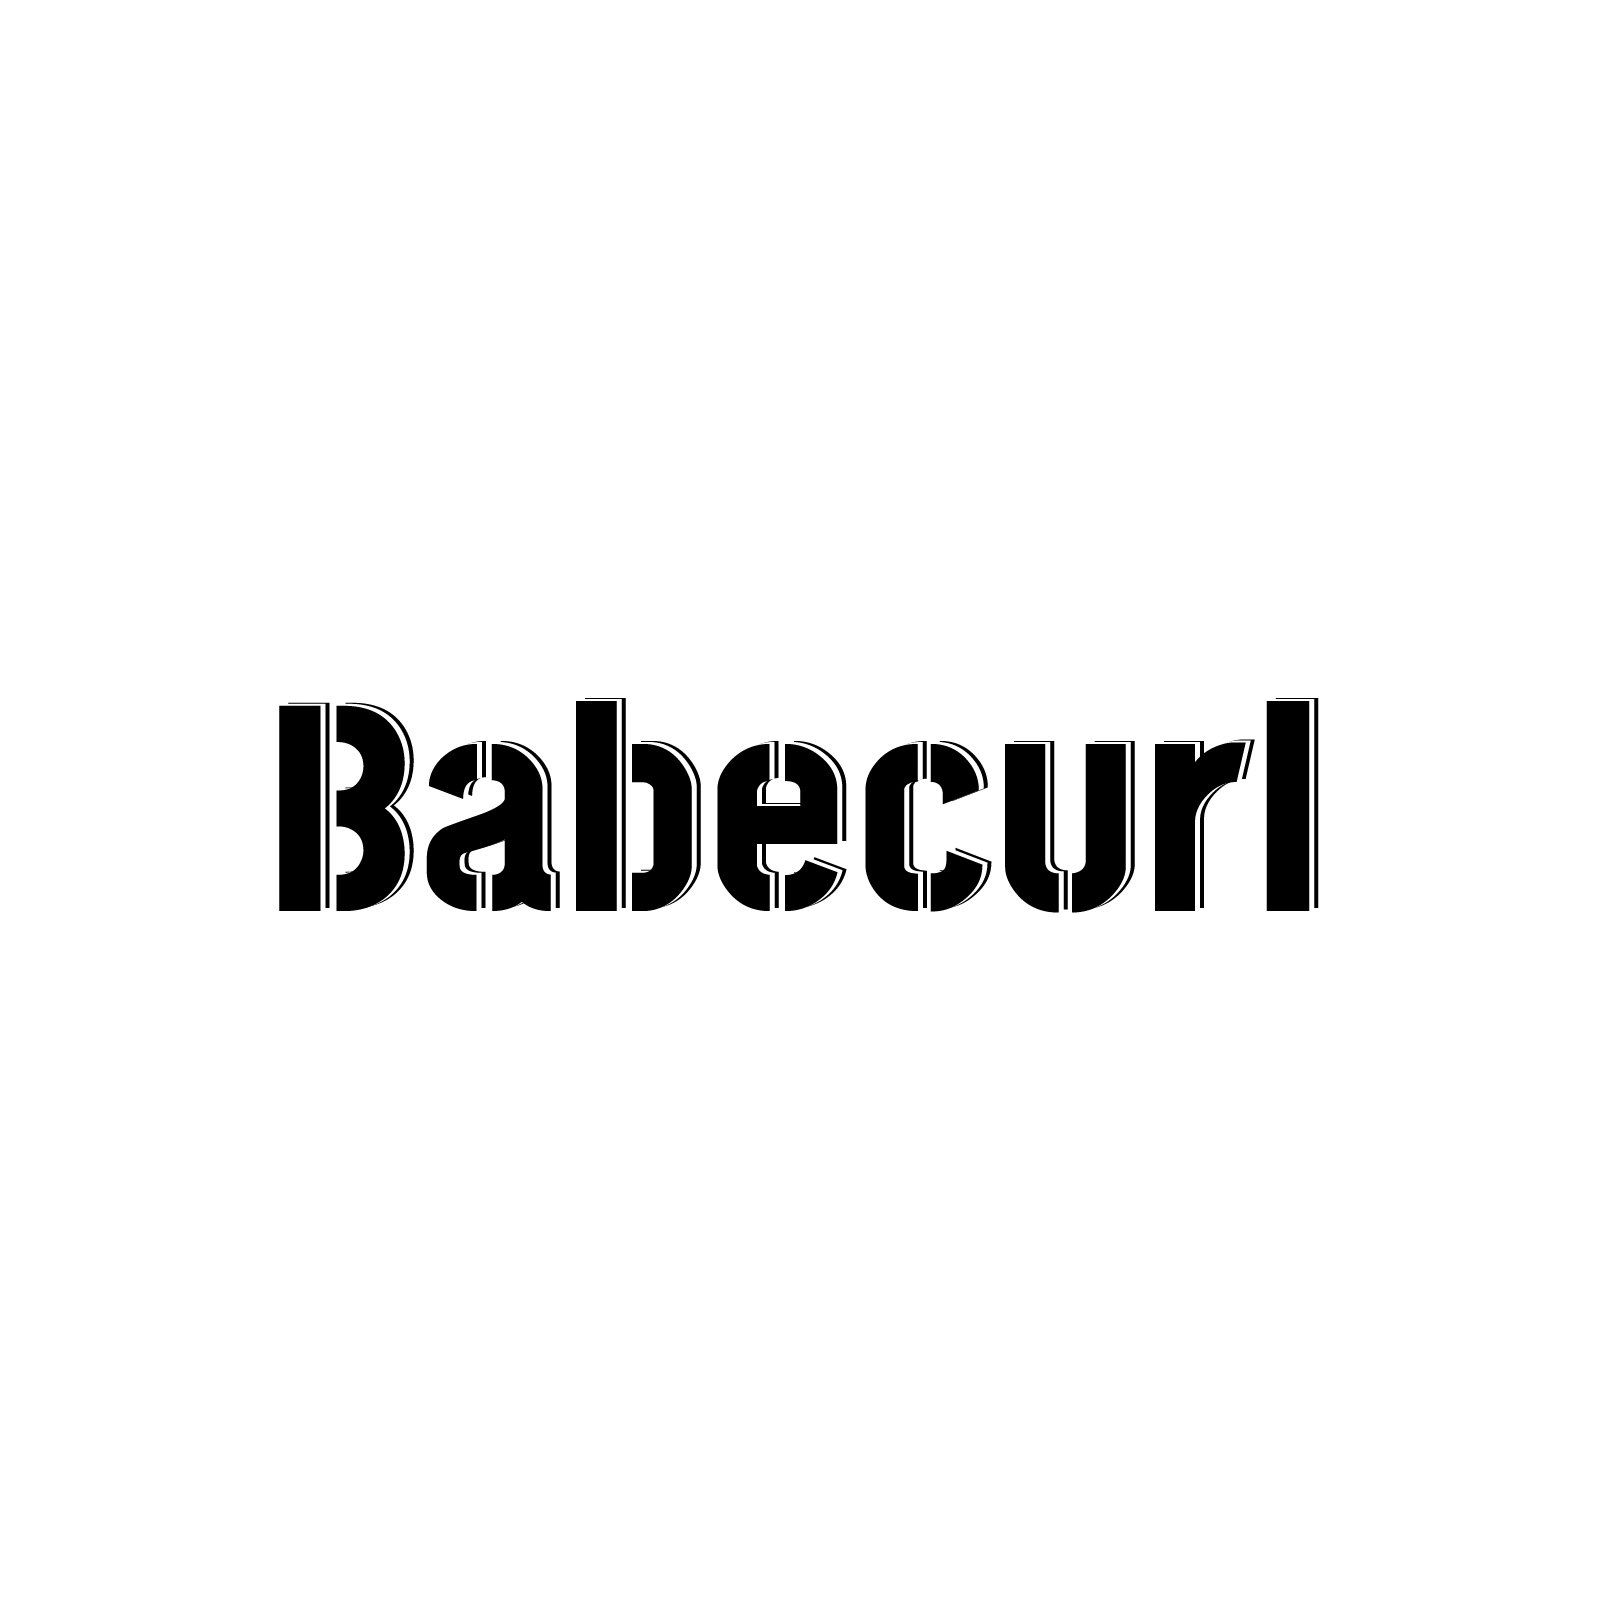  BABECURL